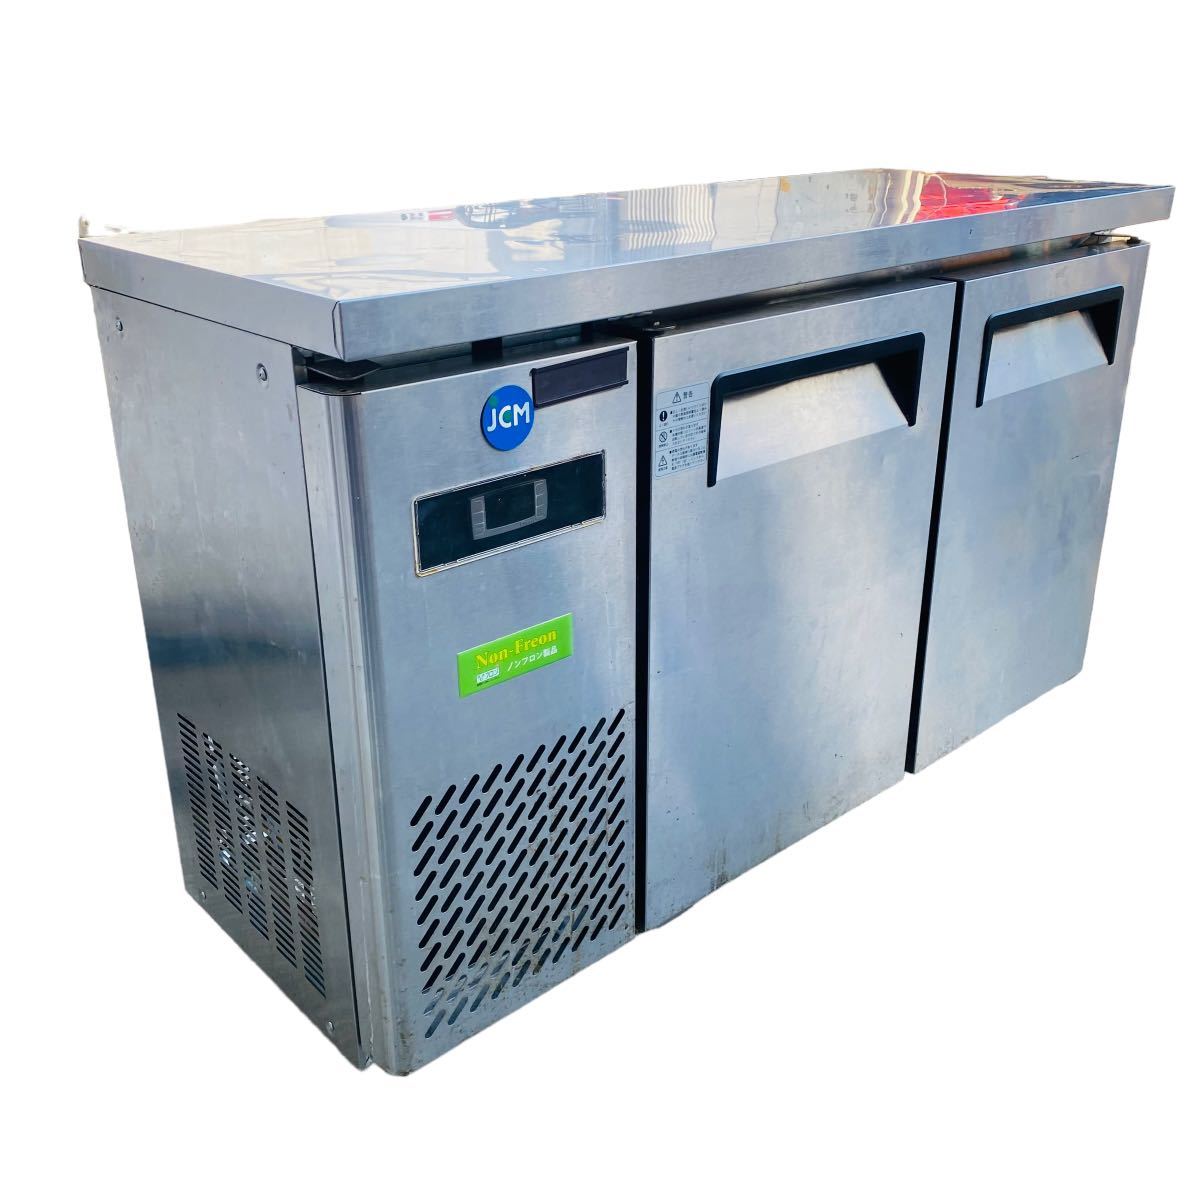 JCM cold table business use pcs under refrigerator store kitchen business use JCMR-1245T operation goods! kitchen equipment 100V business use refrigerator 